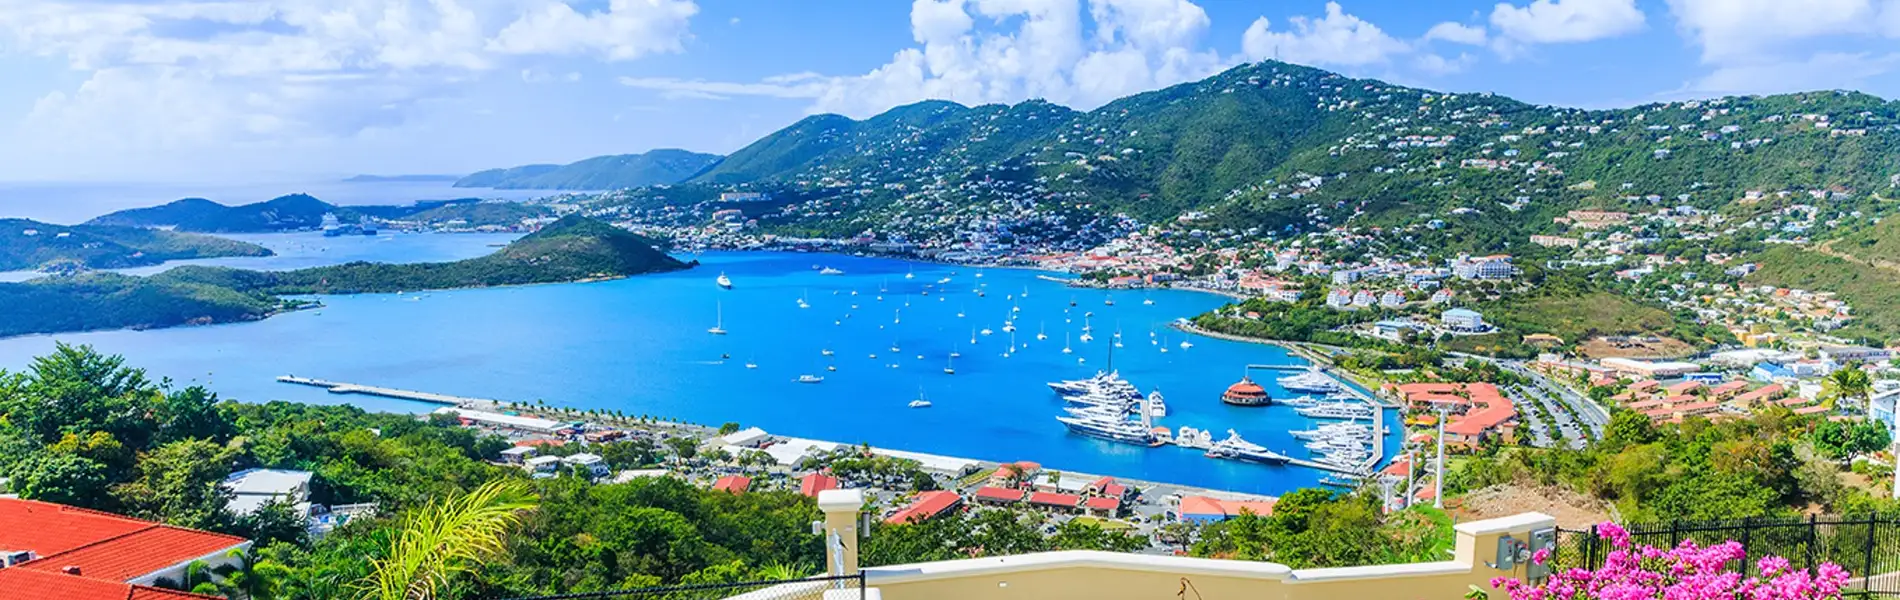 Charlotte Amalie, St. Thomas (United States Virgin Islands)